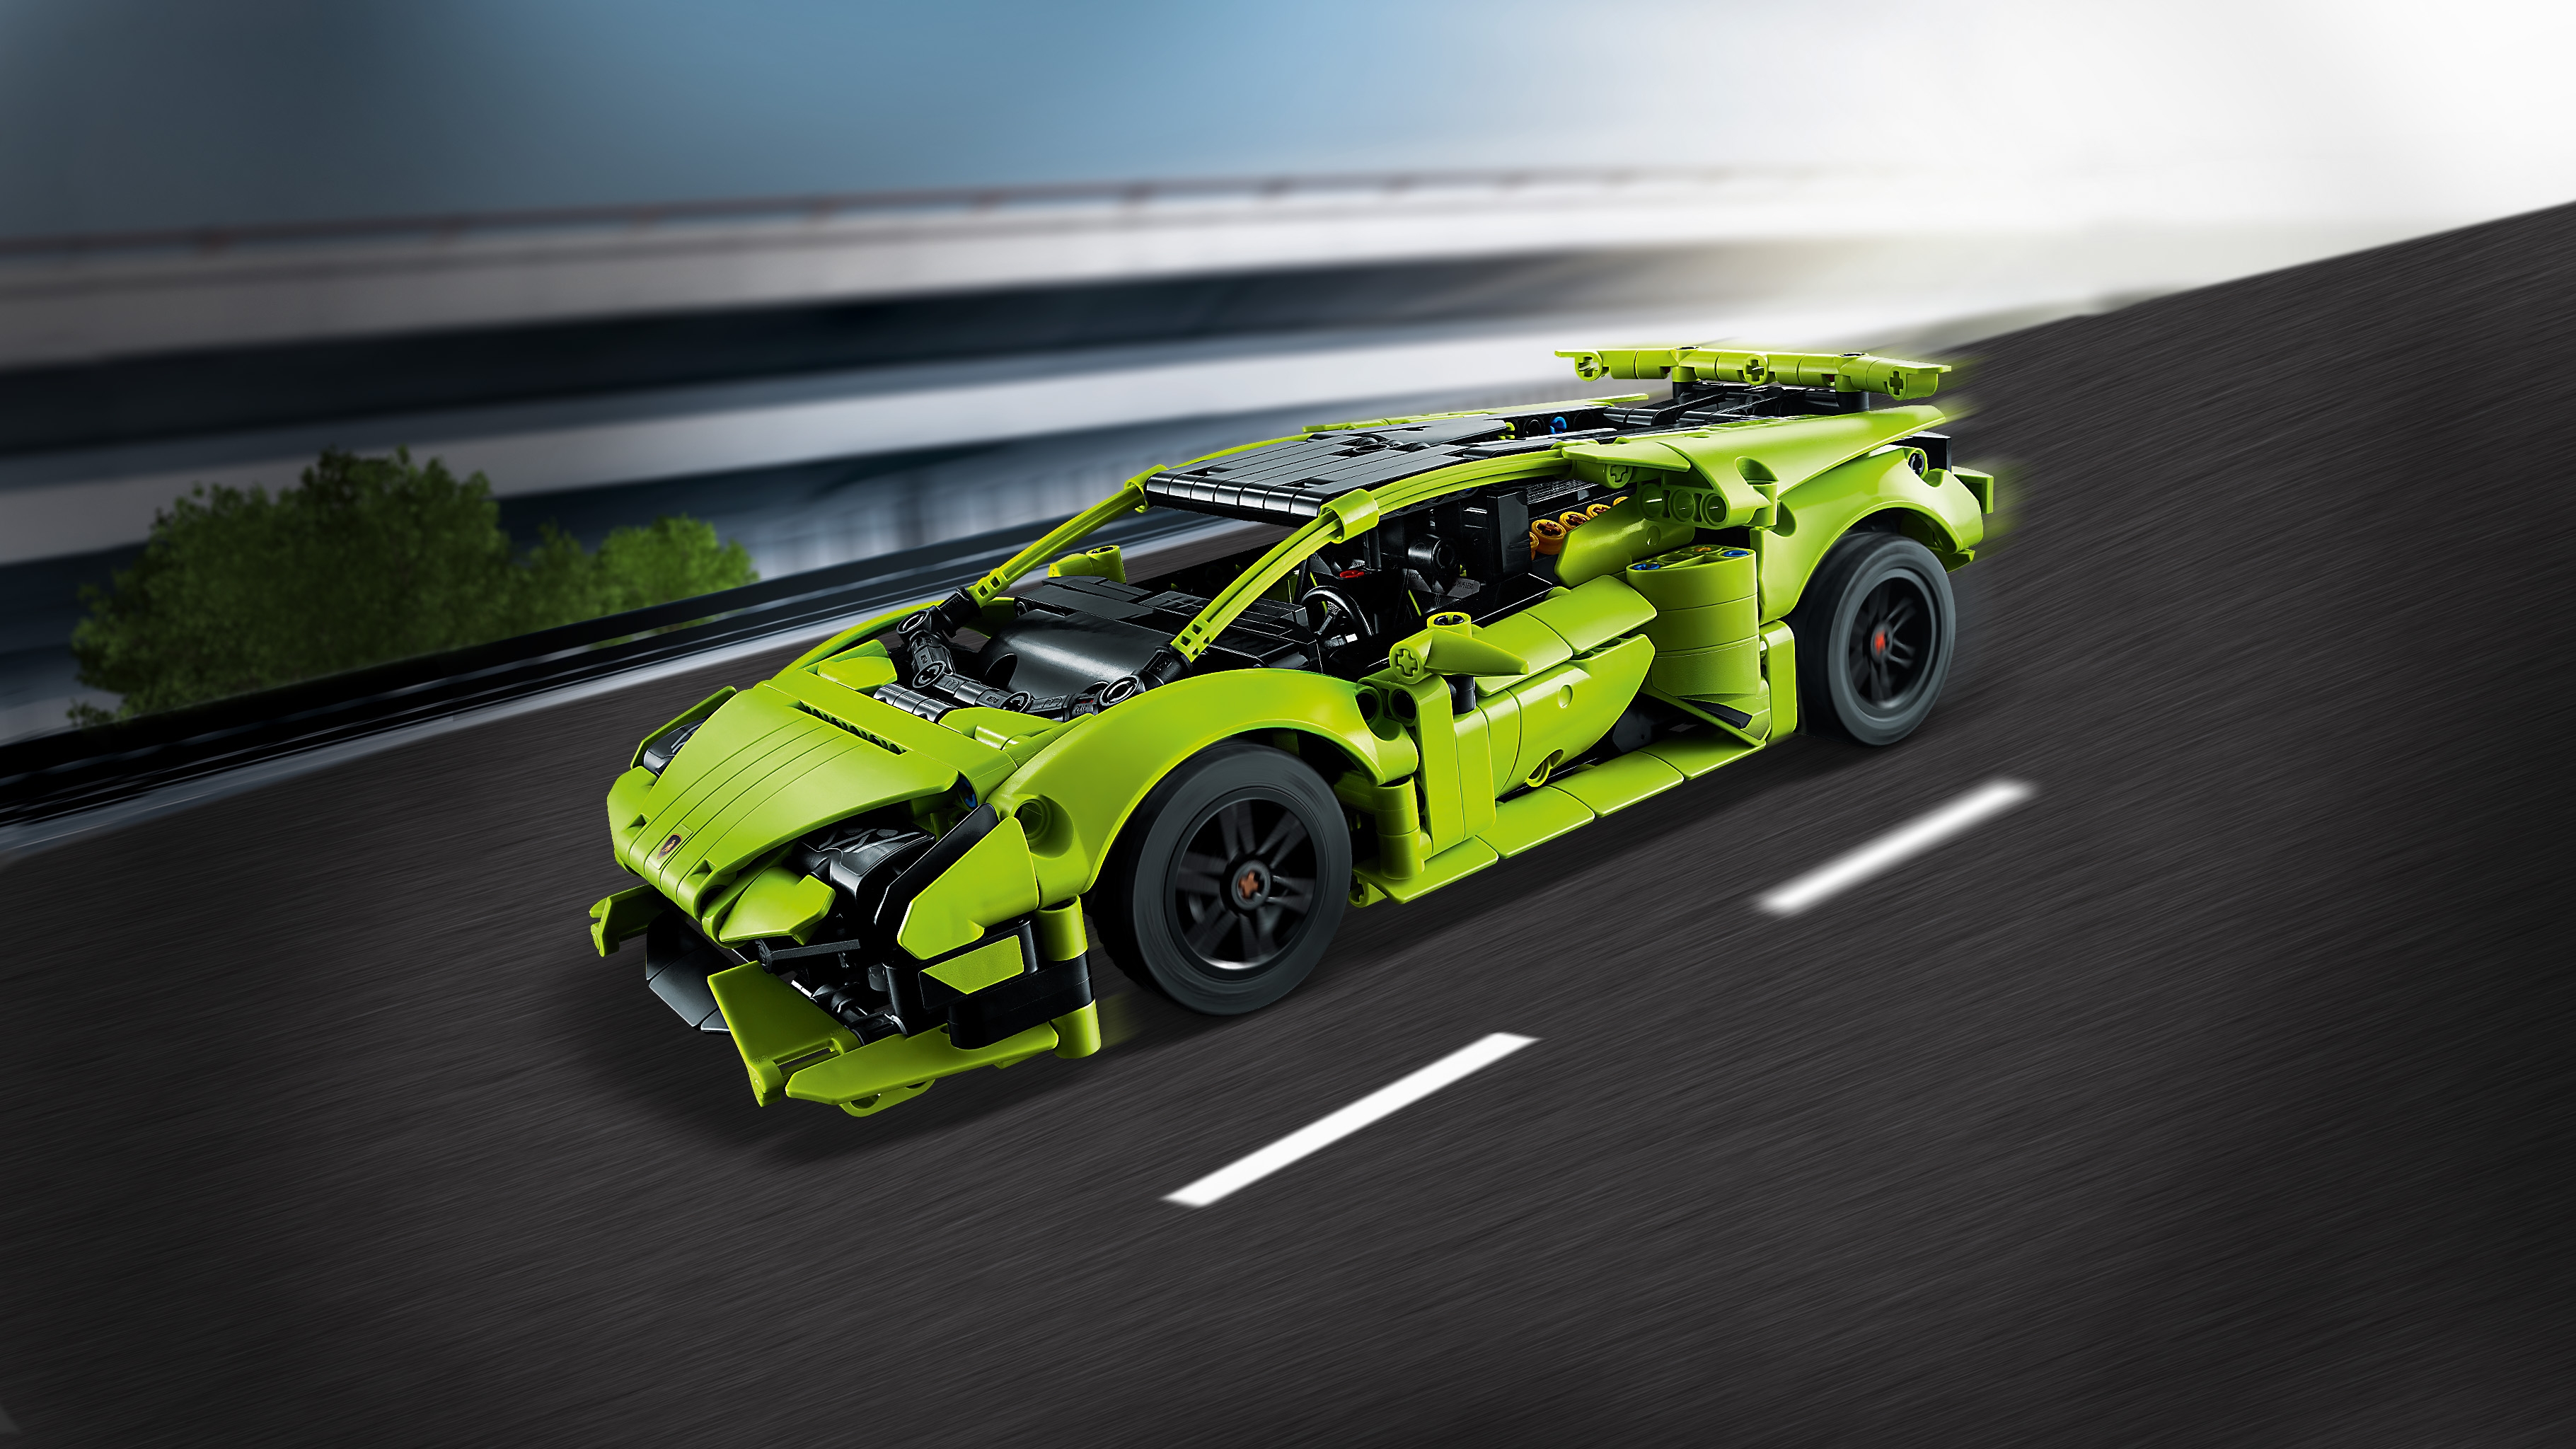 Buy LEGO Technic Lamborghini Huracán Tecnica Model Car Set